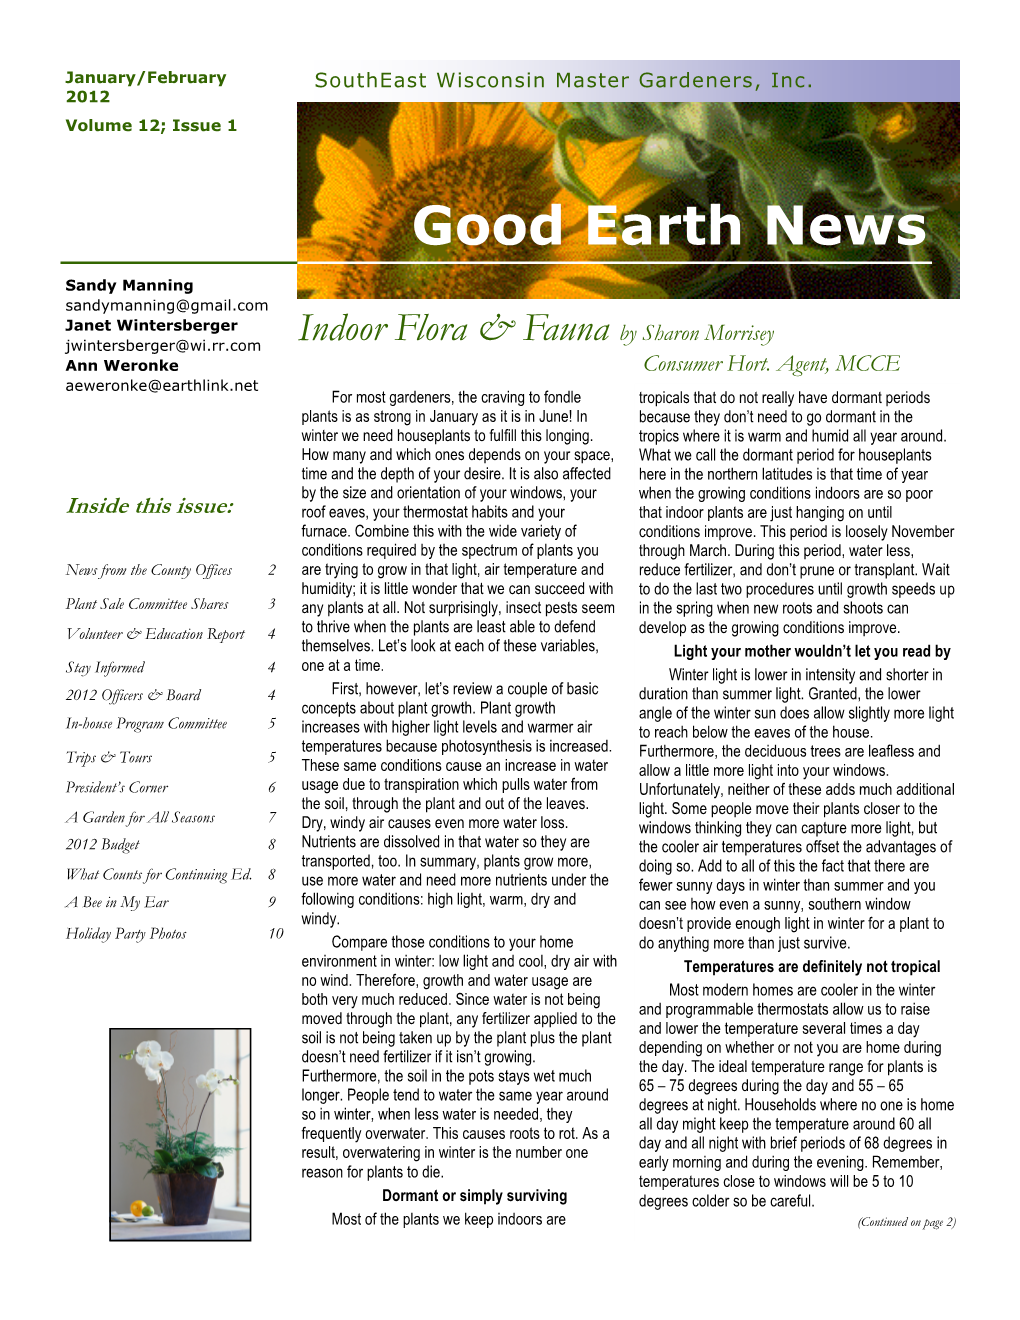 Good Earth News